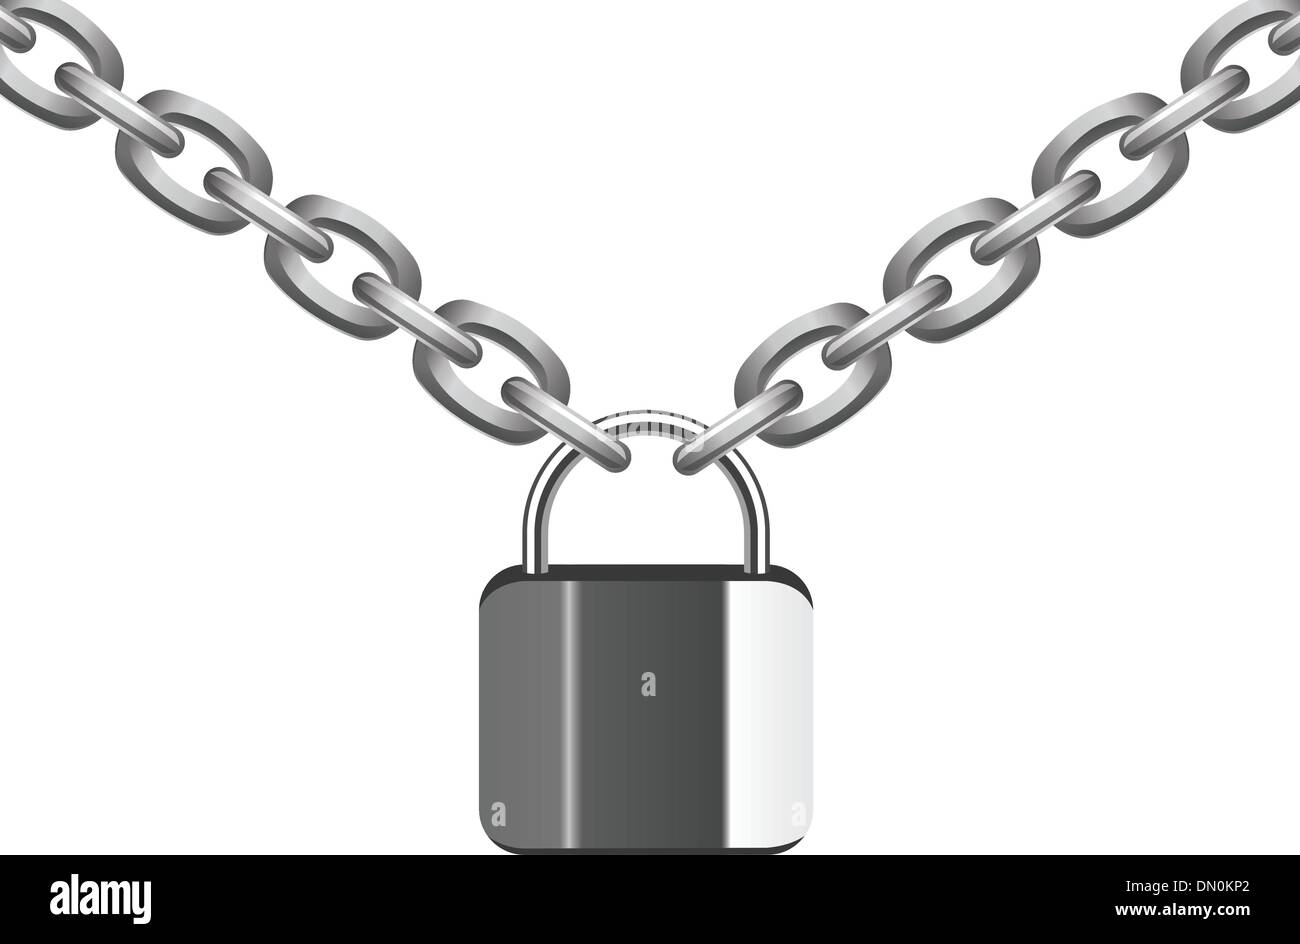 Chain under lock Royalty Free Vector Image - VectorStock